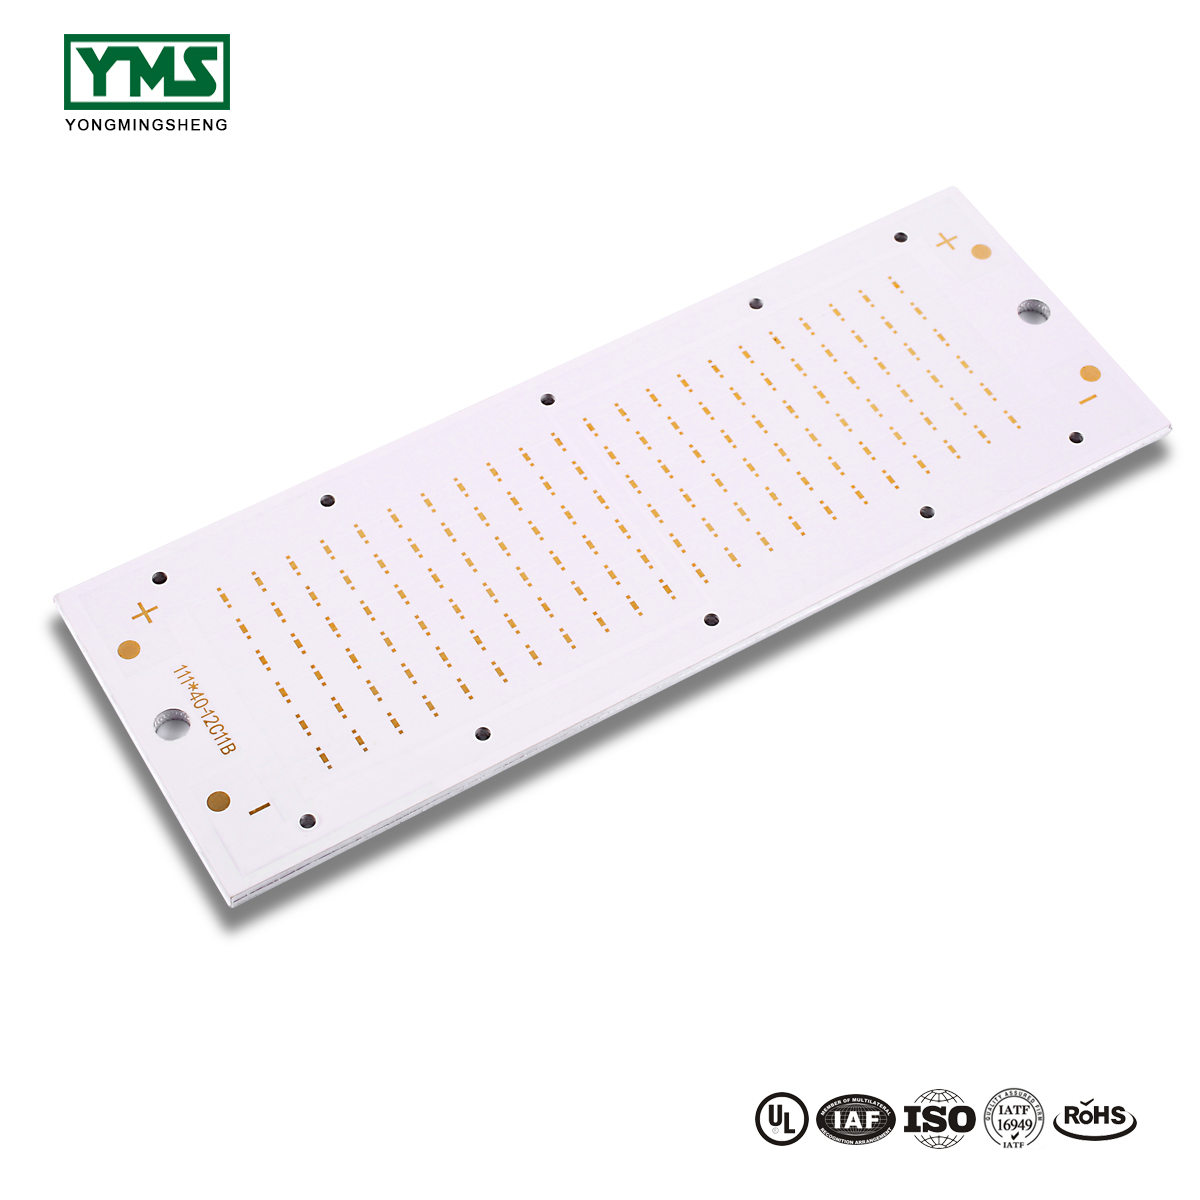 China Gold Supplier for 94v0 Bare Printed Circuit Board - 1Layer Aluminum base Board | YMSPCB – Yongmingsheng